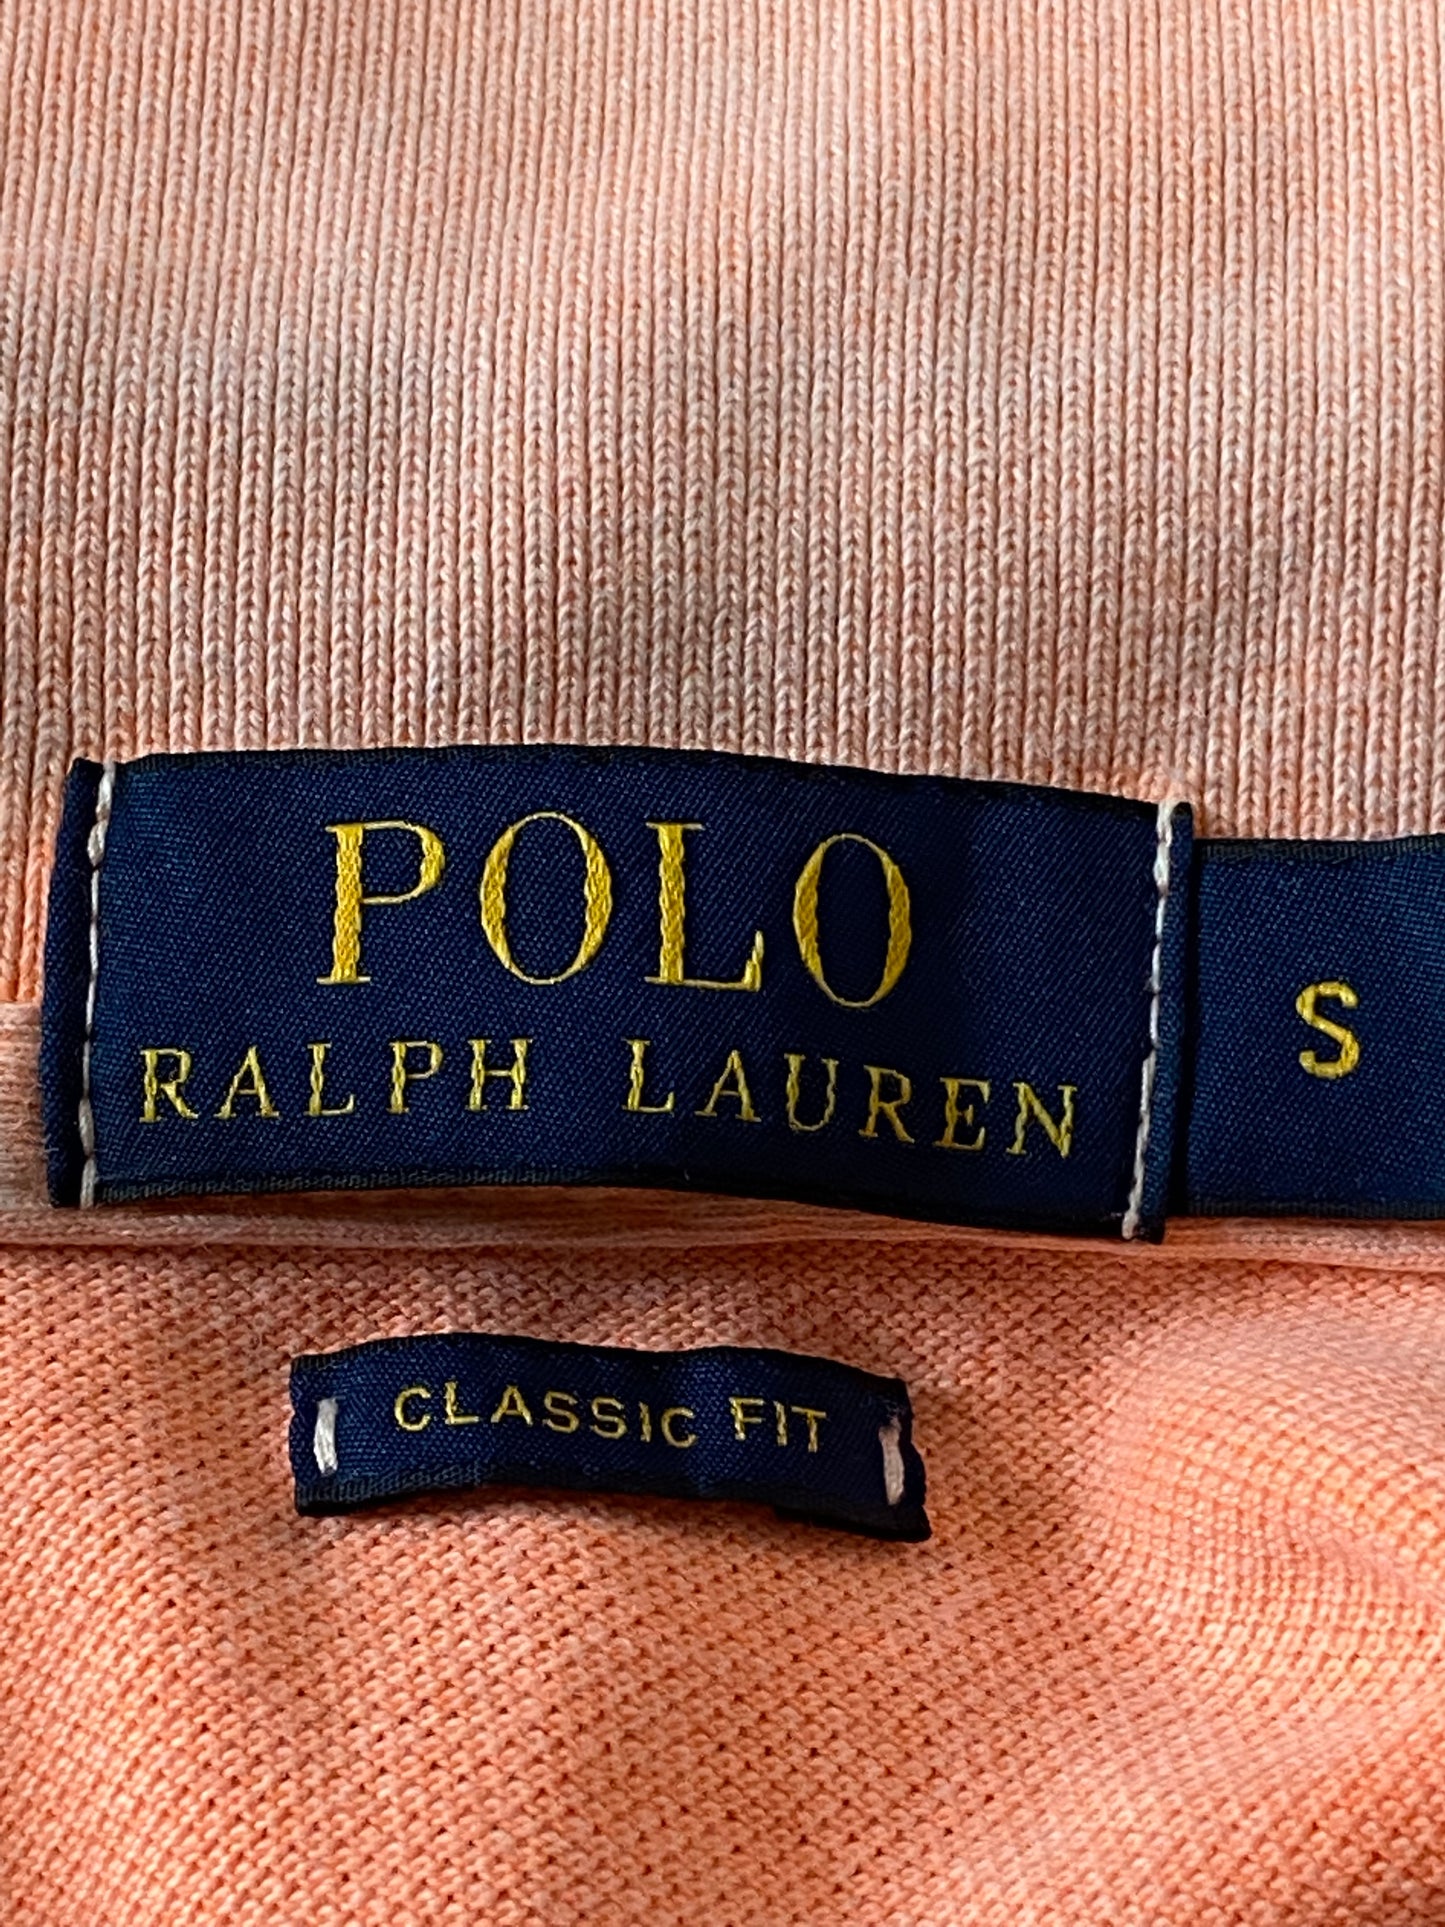 Polo Ralph Lauren Vintage Men's Polo Shirt - Small Orange Cotton